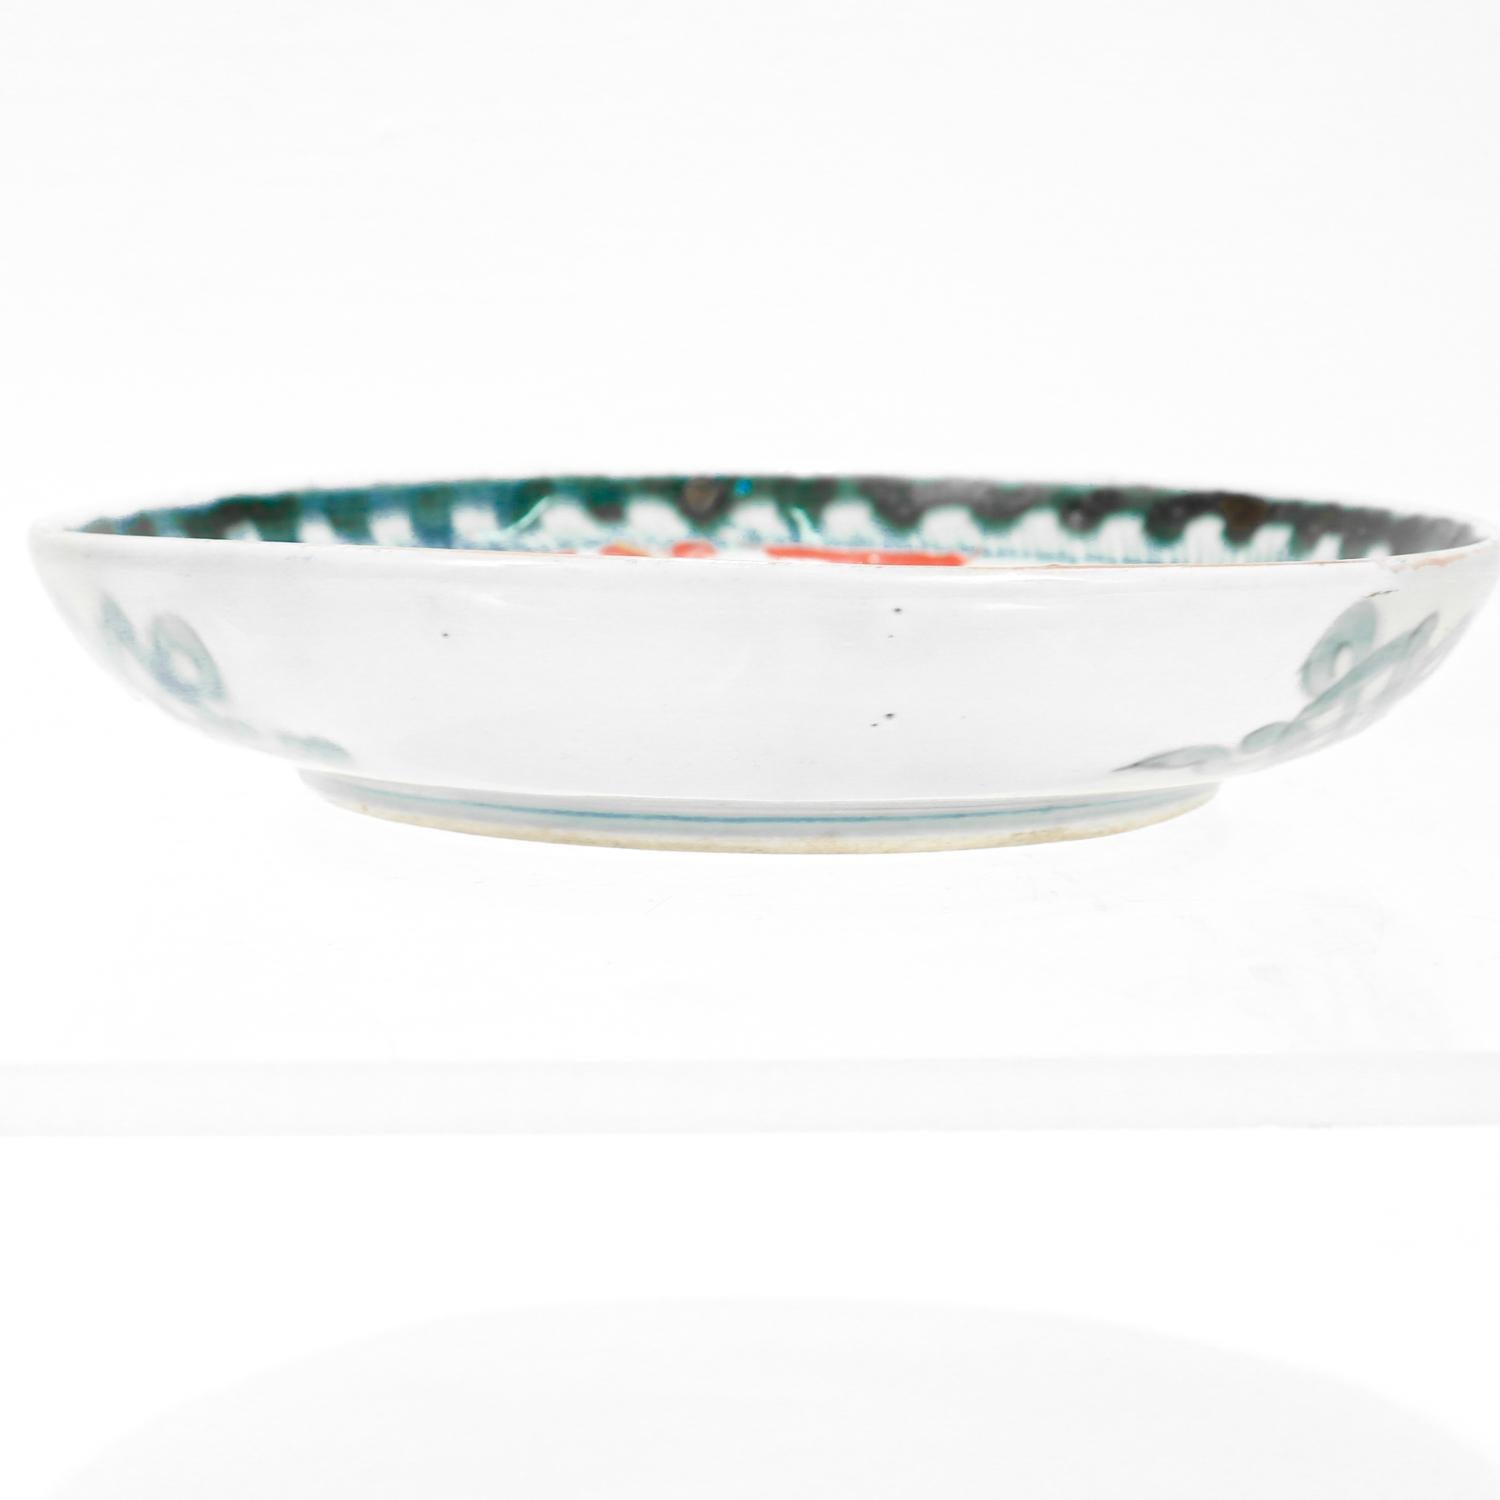 Antique Japanese Imari Porcelain Plate or Dish For Sale 3